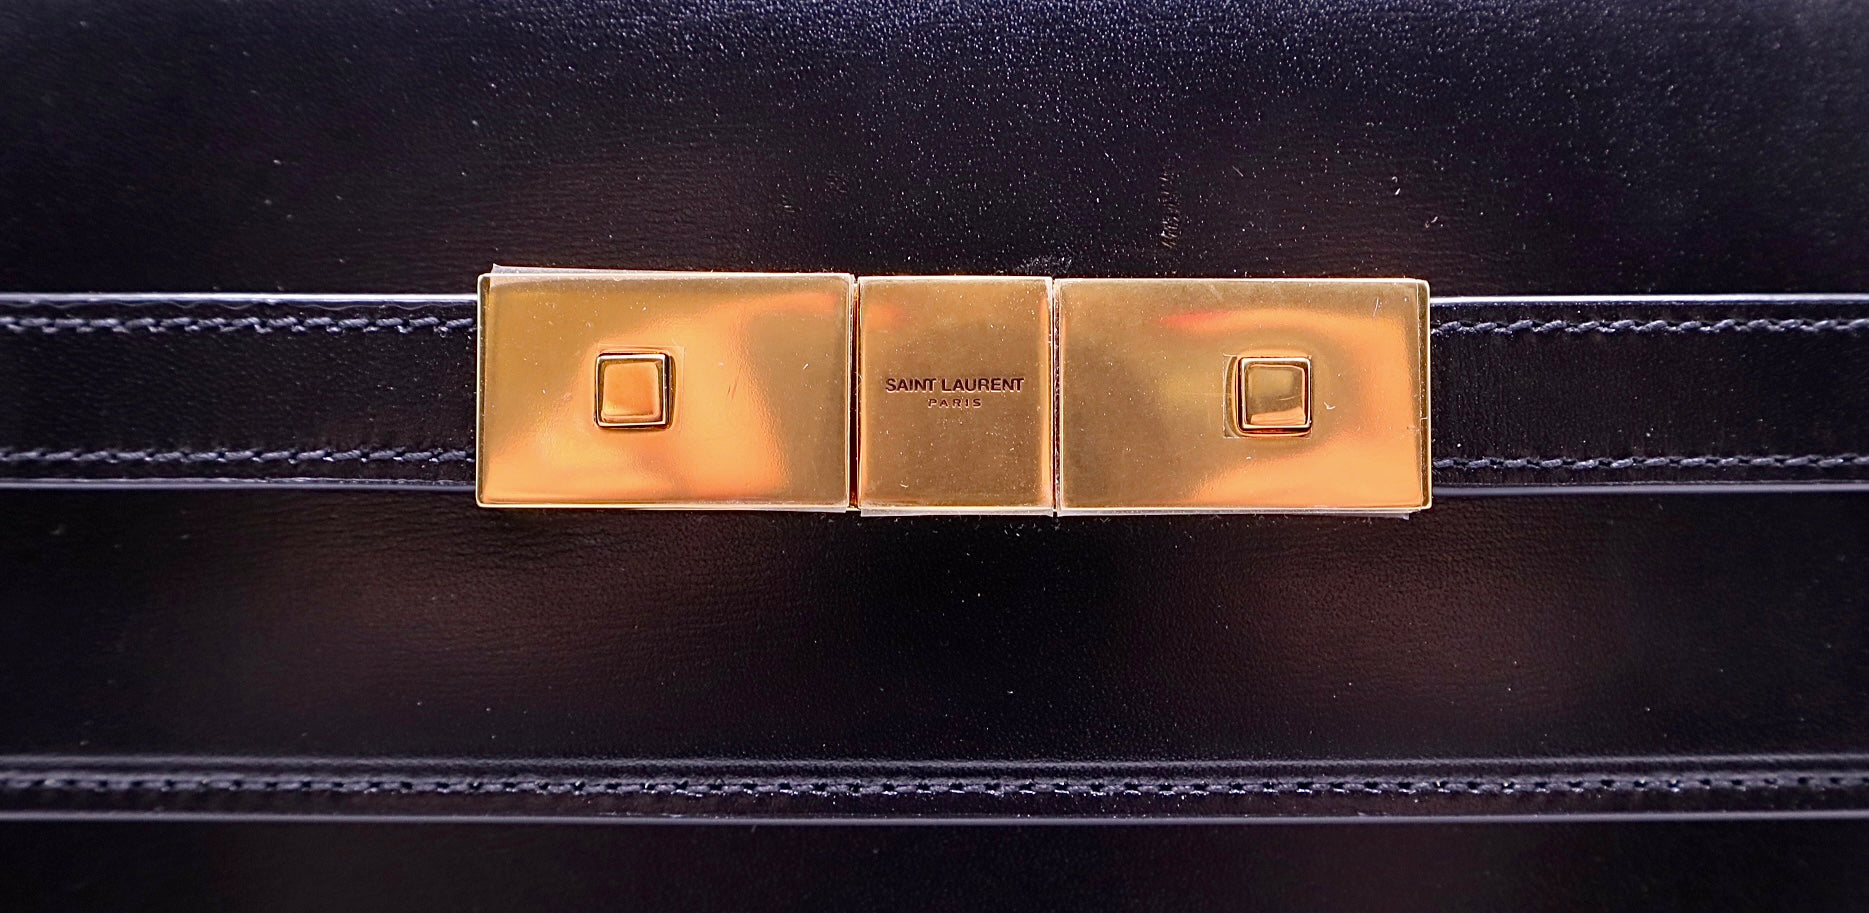 Close up of Saint Laurent gold magentic buckle closure with Saint Laurent logo + protective plastic on it.